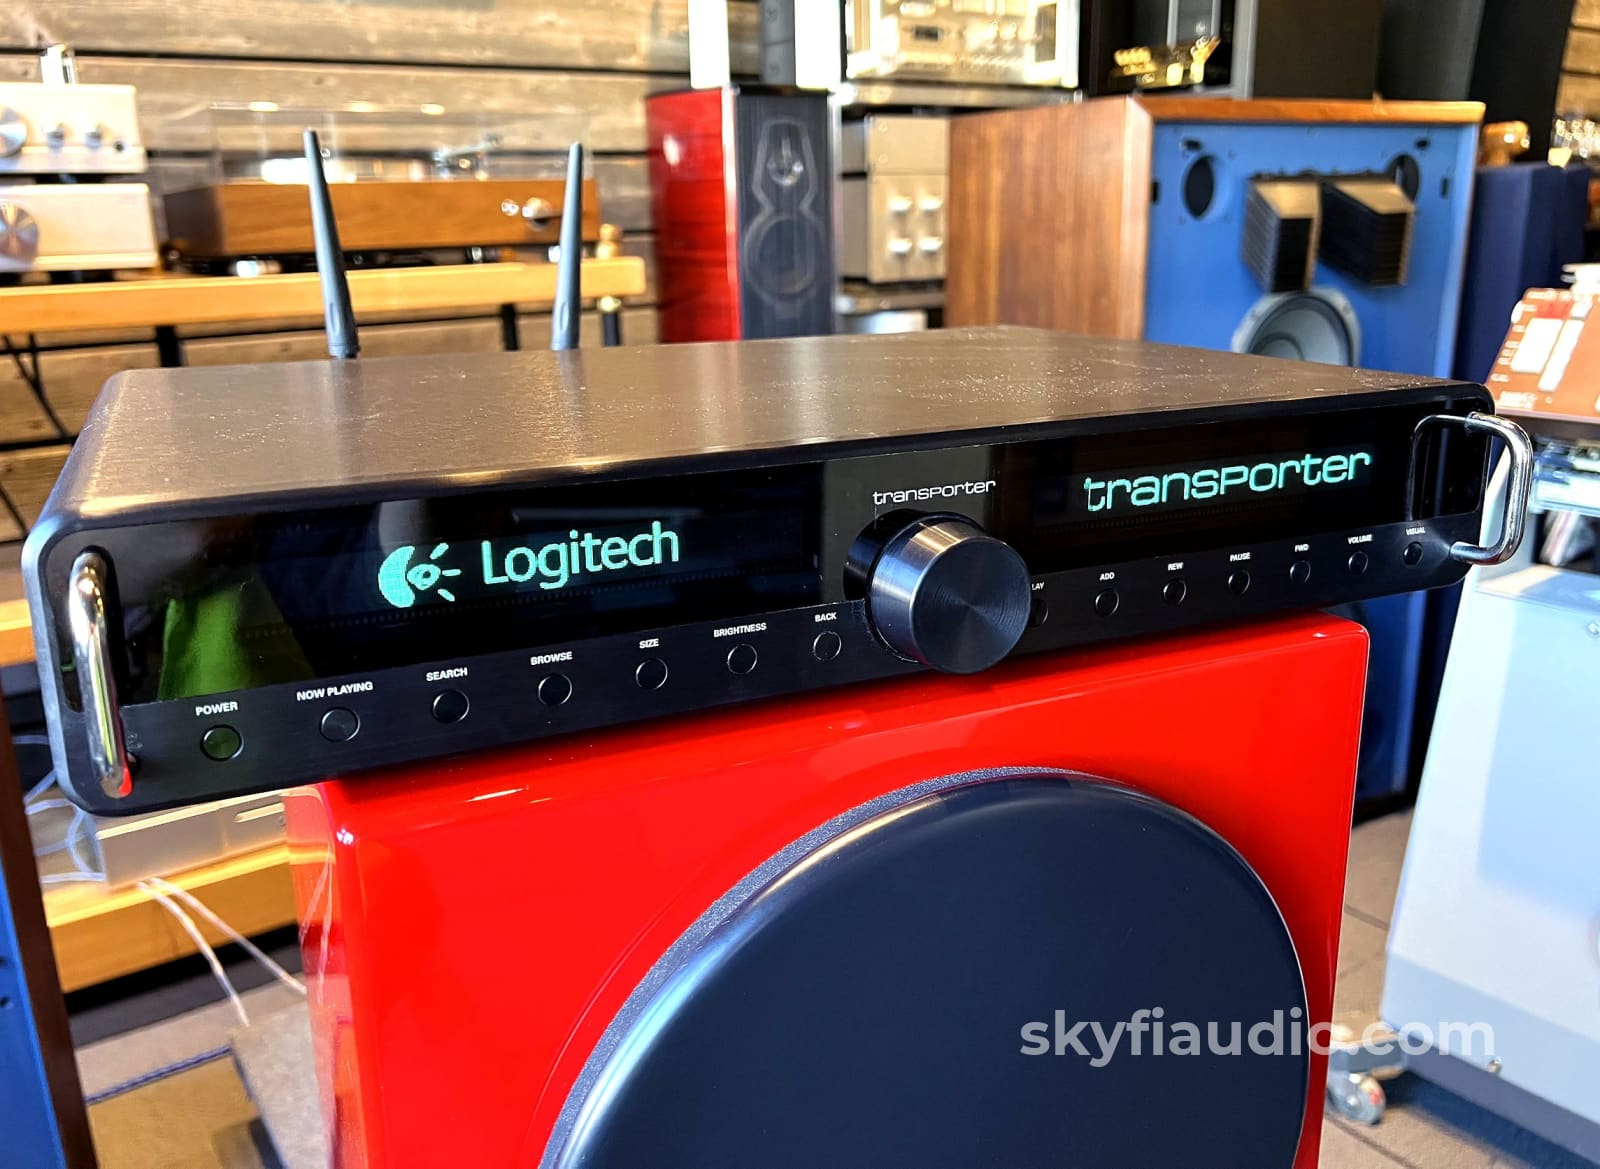 Logitech Transporter Audiophile Streamer + Dac Roon Compatible Endpoint Cd Digital